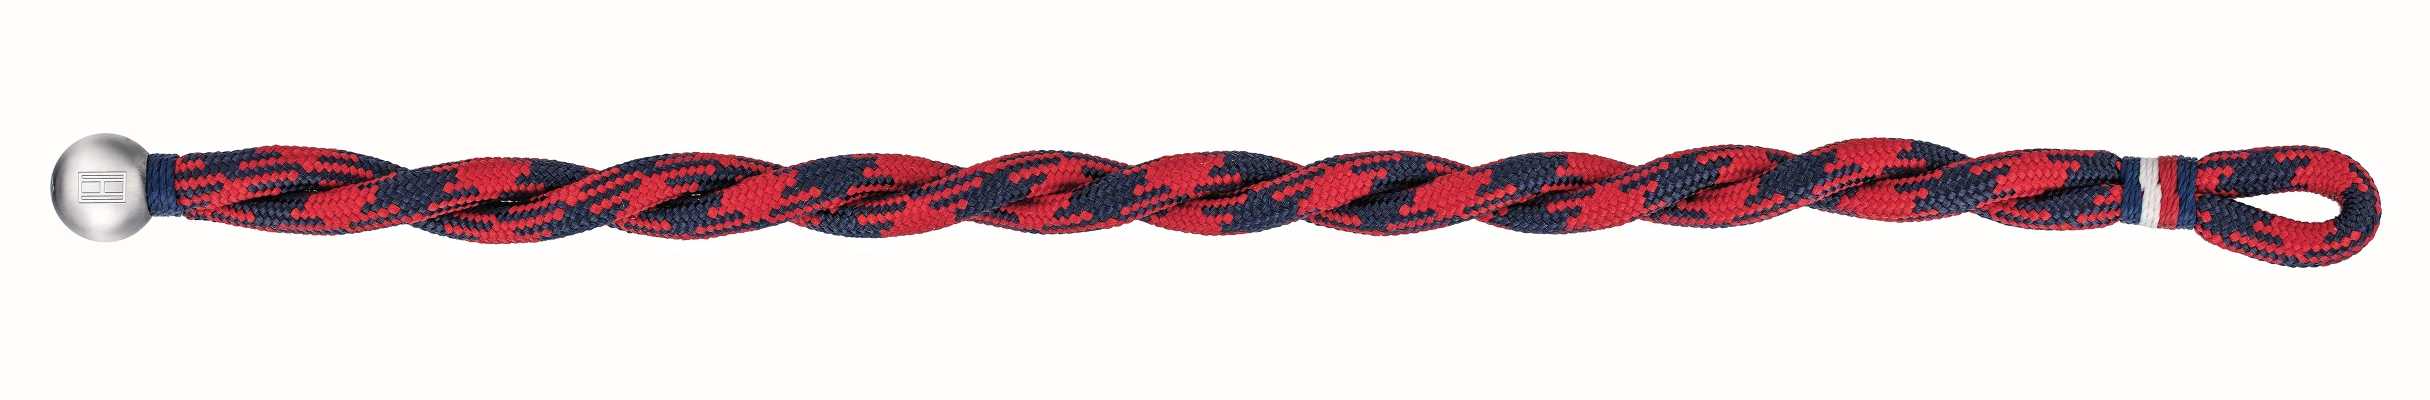 Tommy Hilfiger Red and Blue Nylon Cord Bracelet 2790048